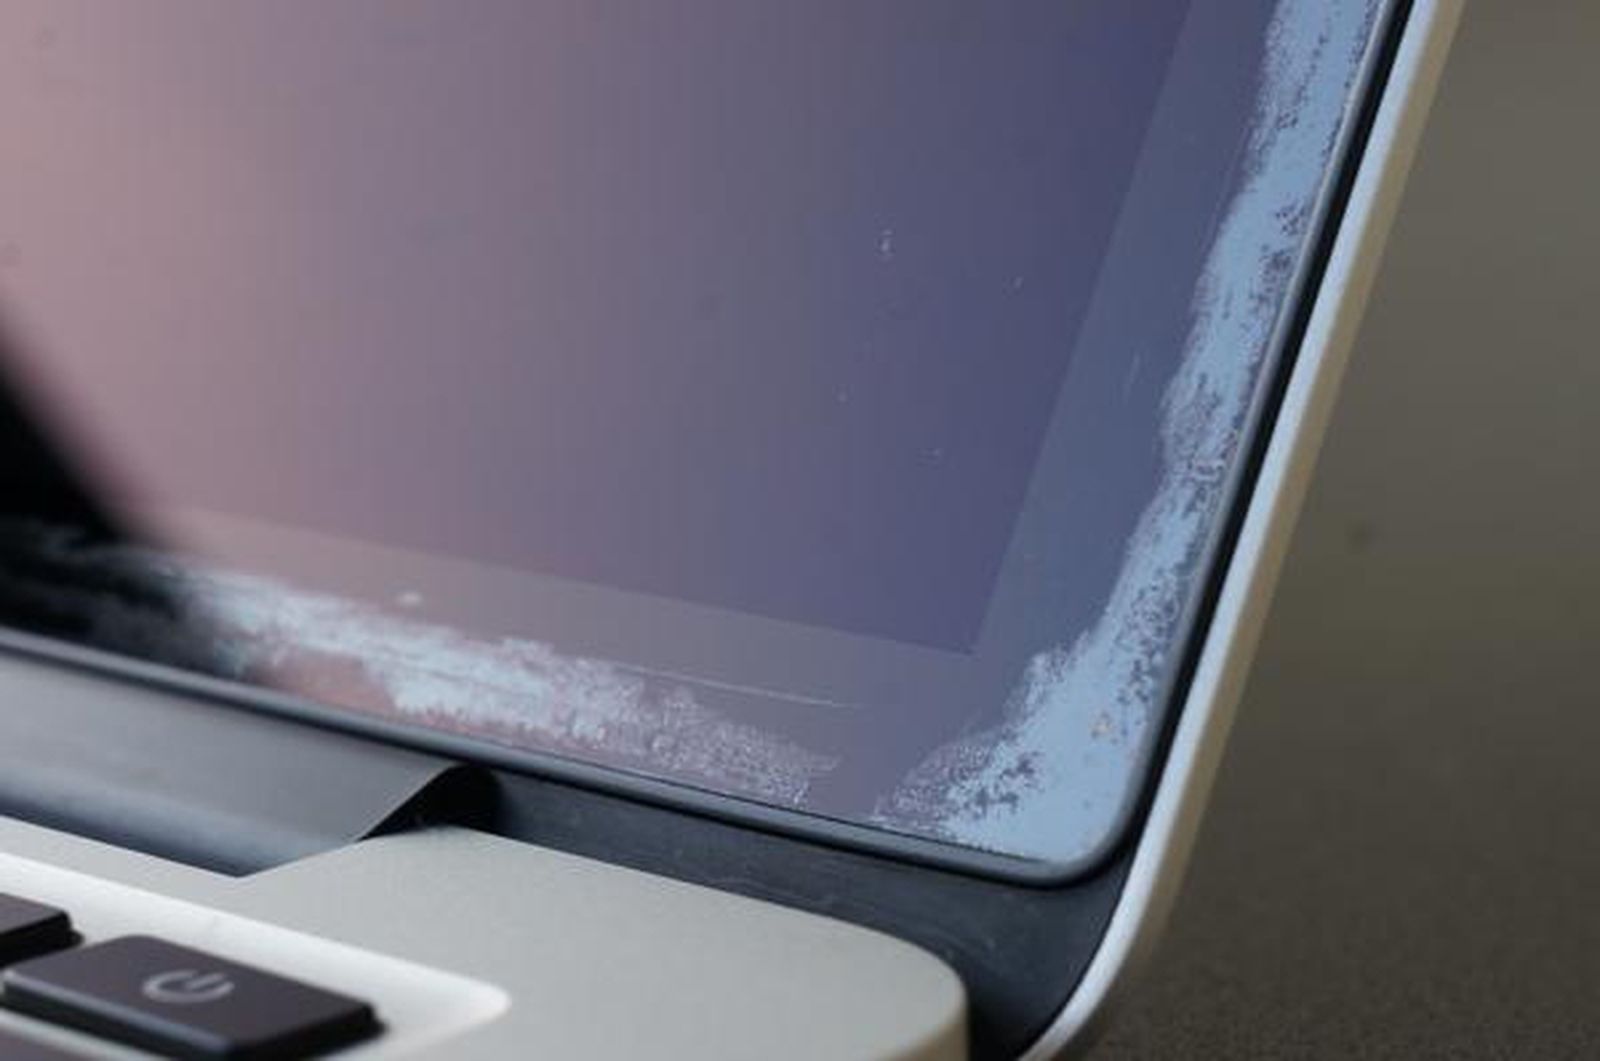 Macbook Pro Anti Reflective Coating Repair Program Remains In Effect But 13 14 Models No Longer Eligible Macrumors